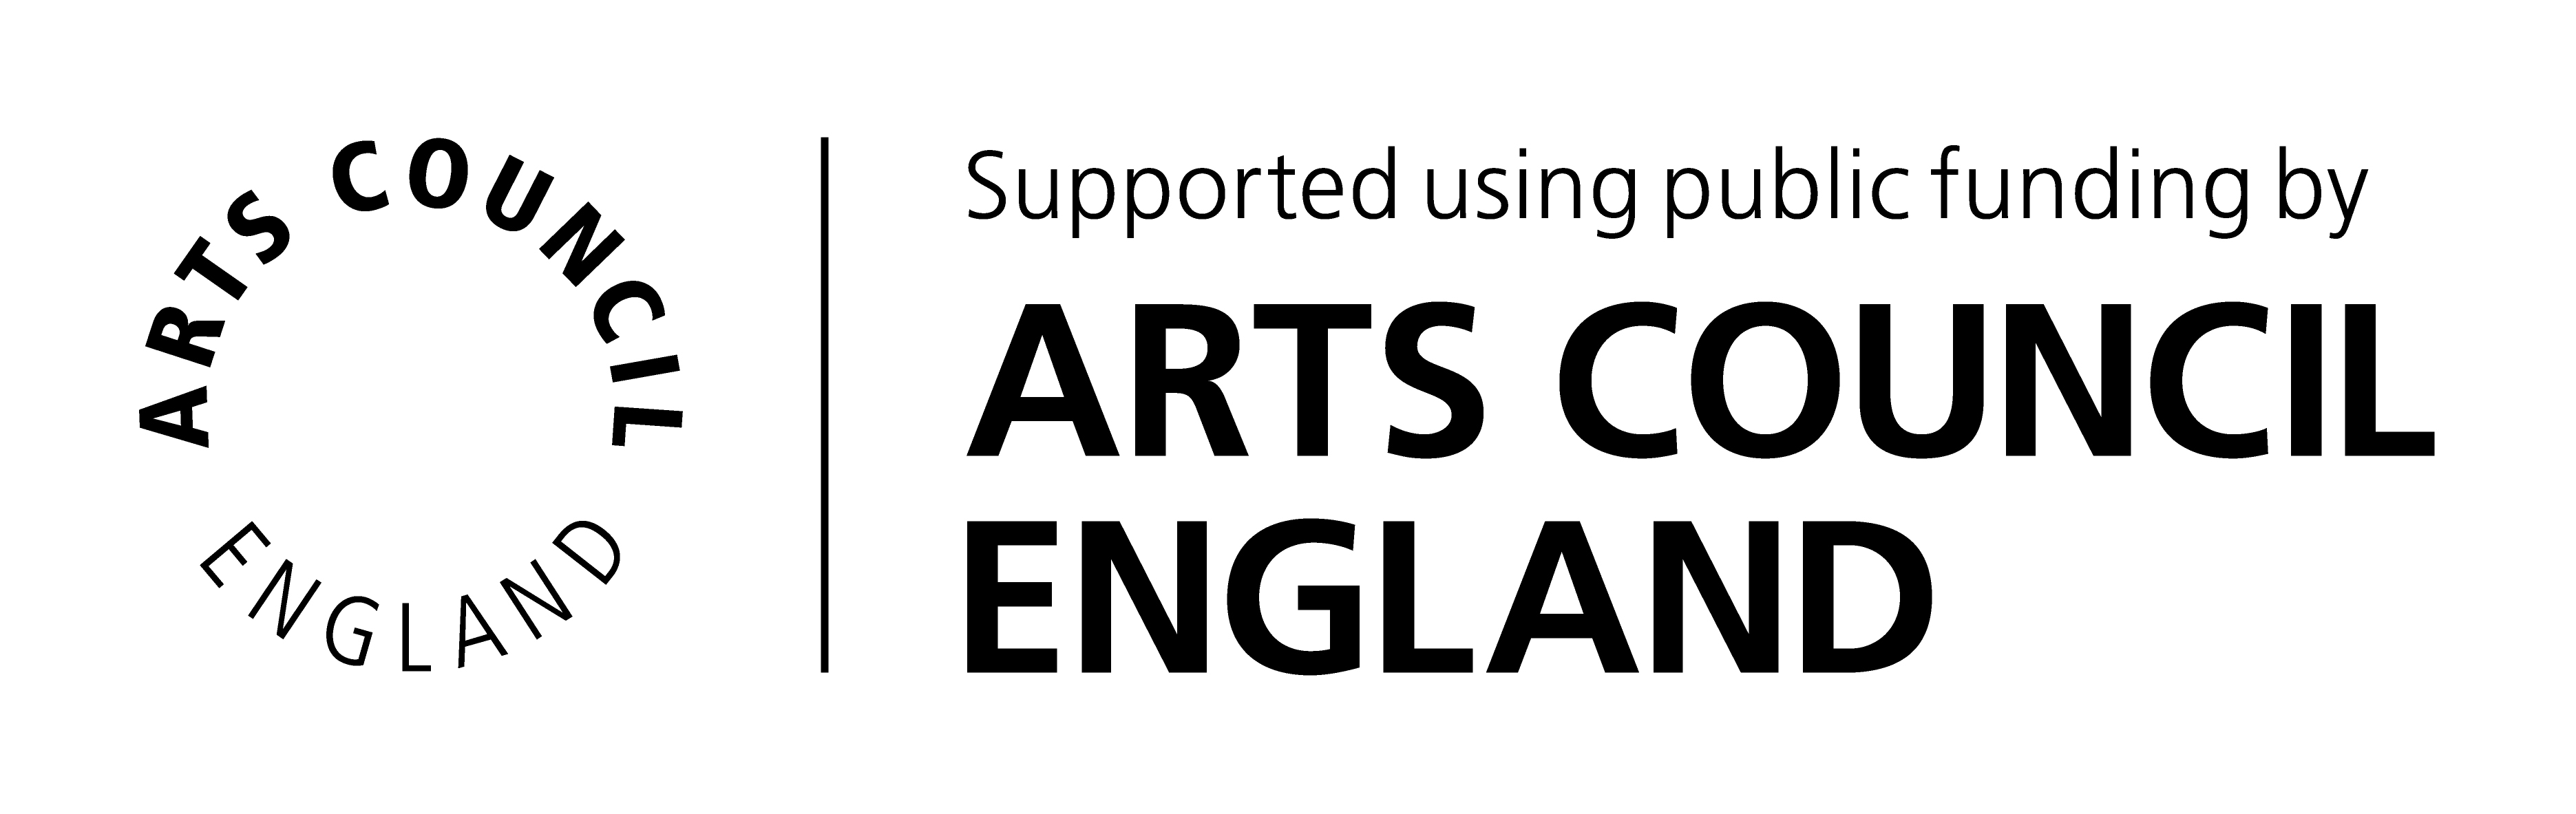 Arts Council Logo.jpg